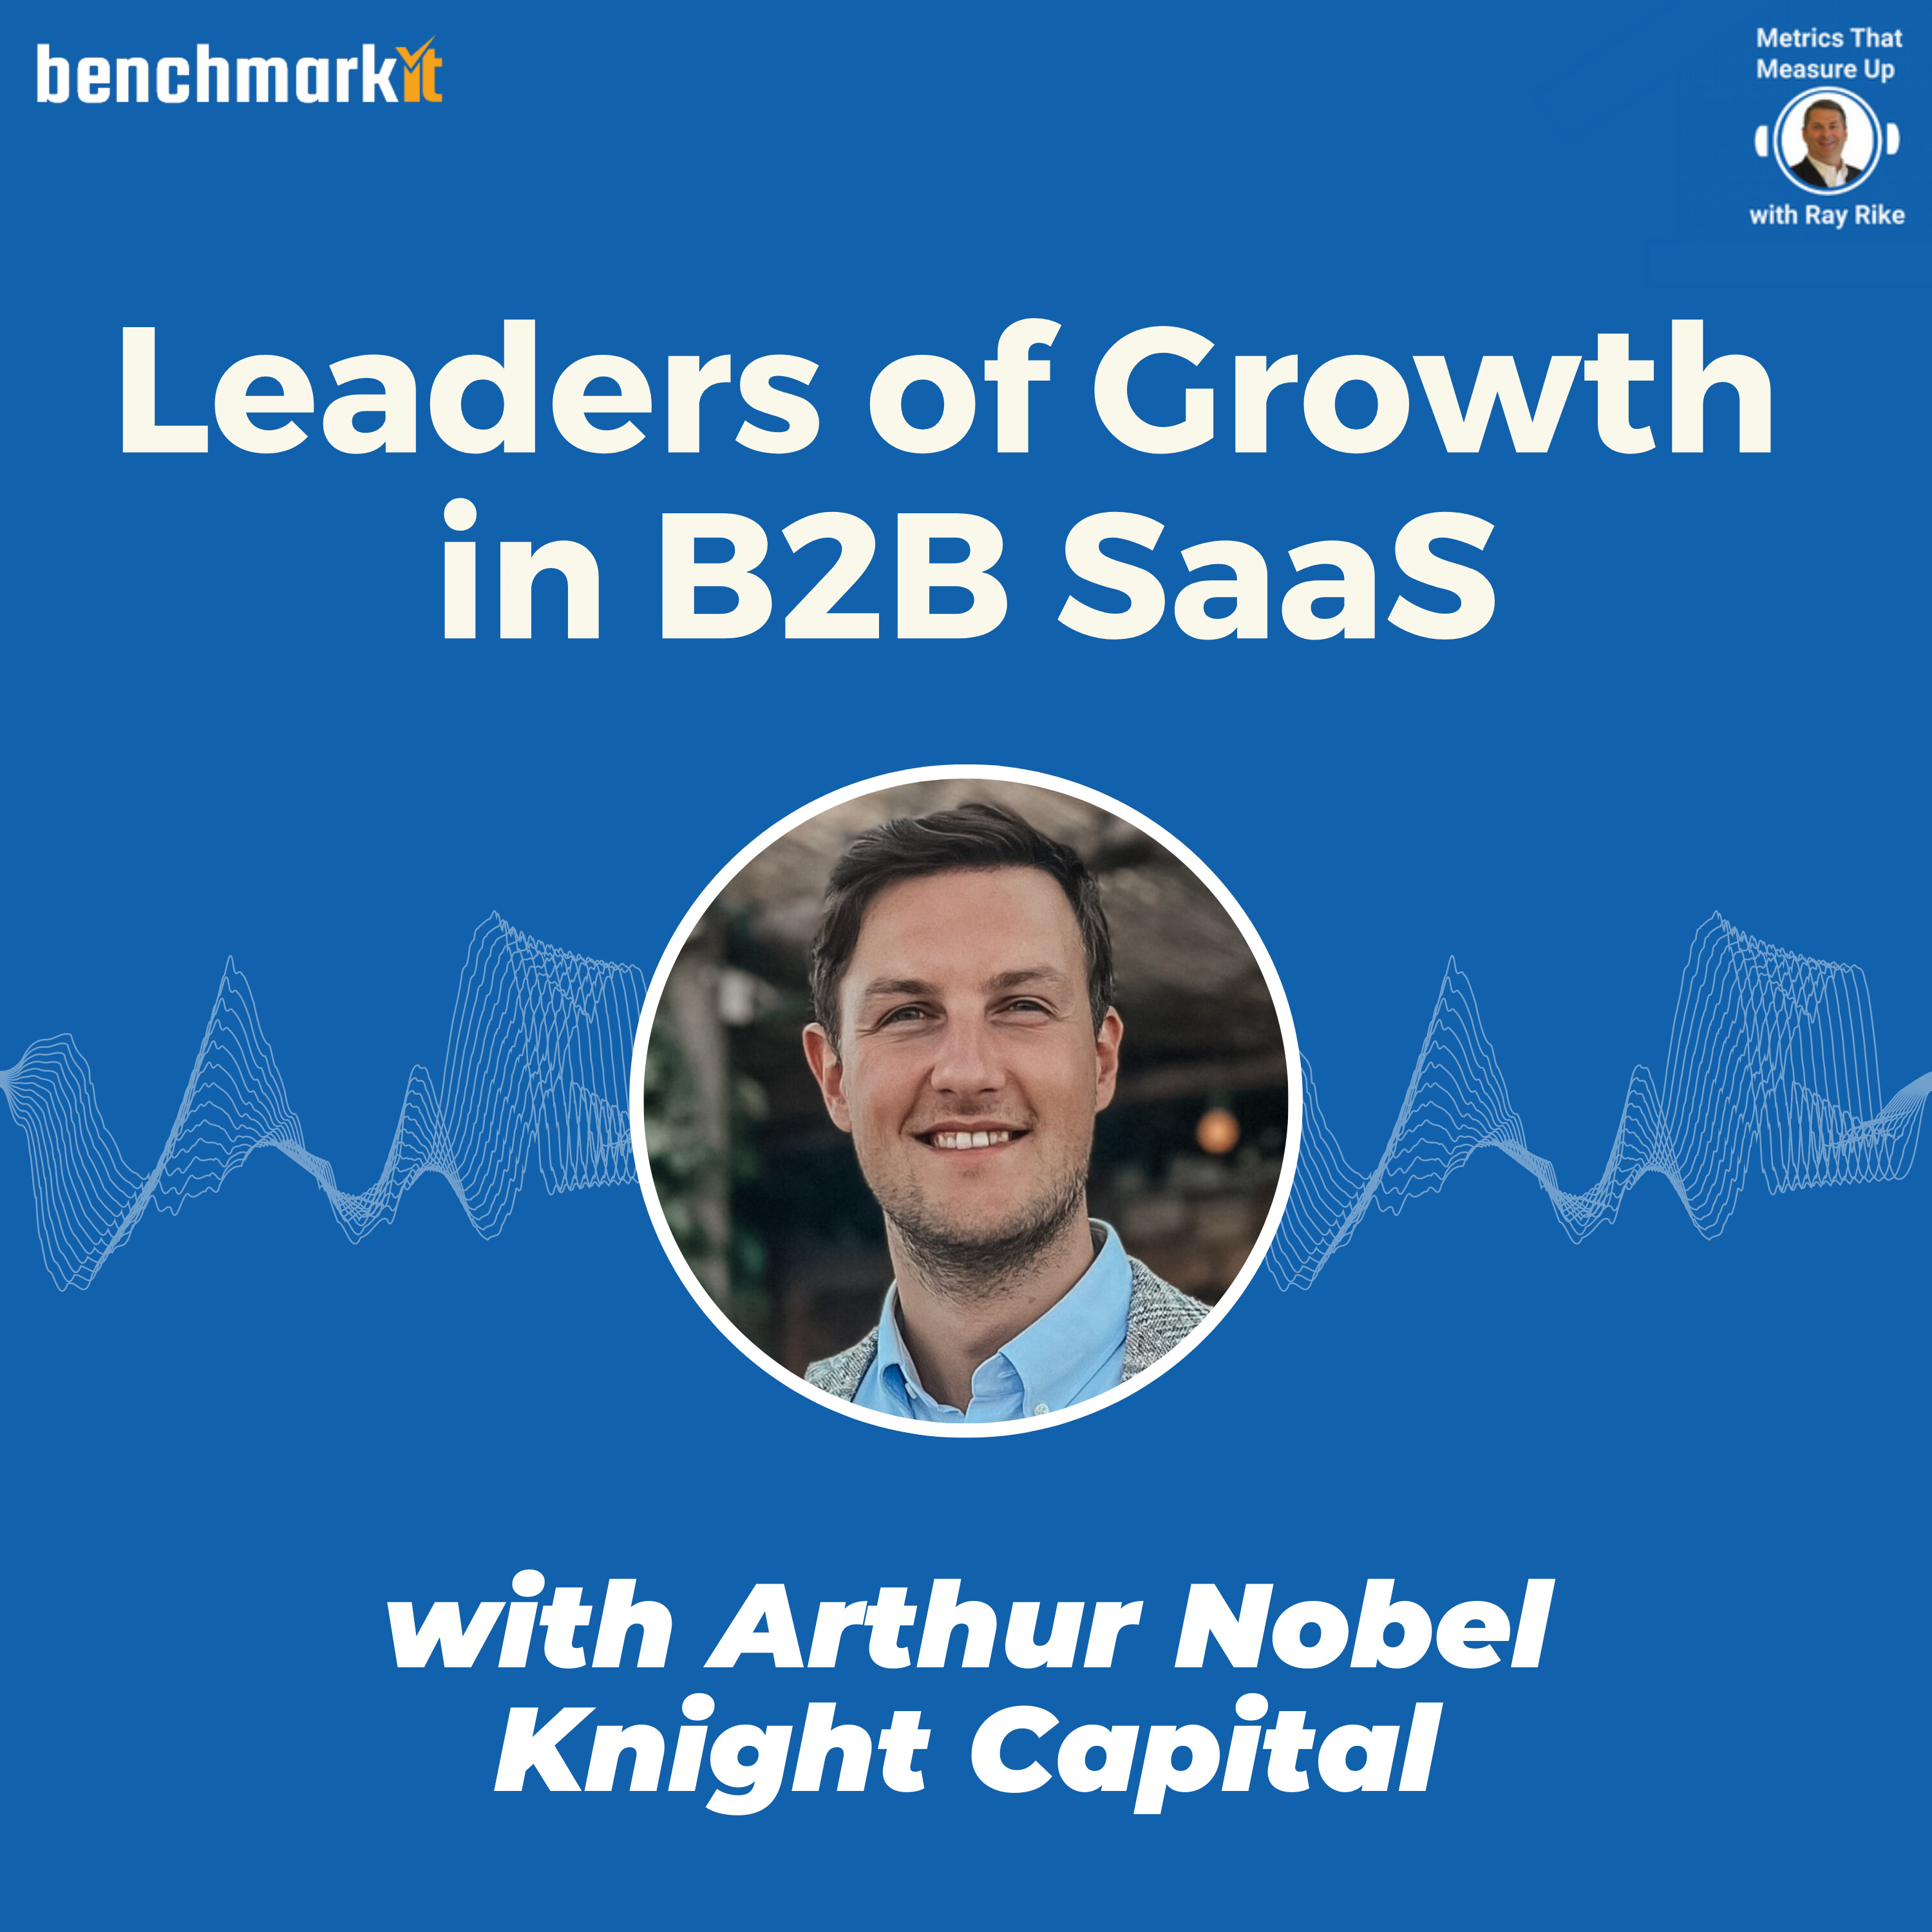 Leaders of Growth in B2B SaaS - with Arthur Nobel, Knight Capital